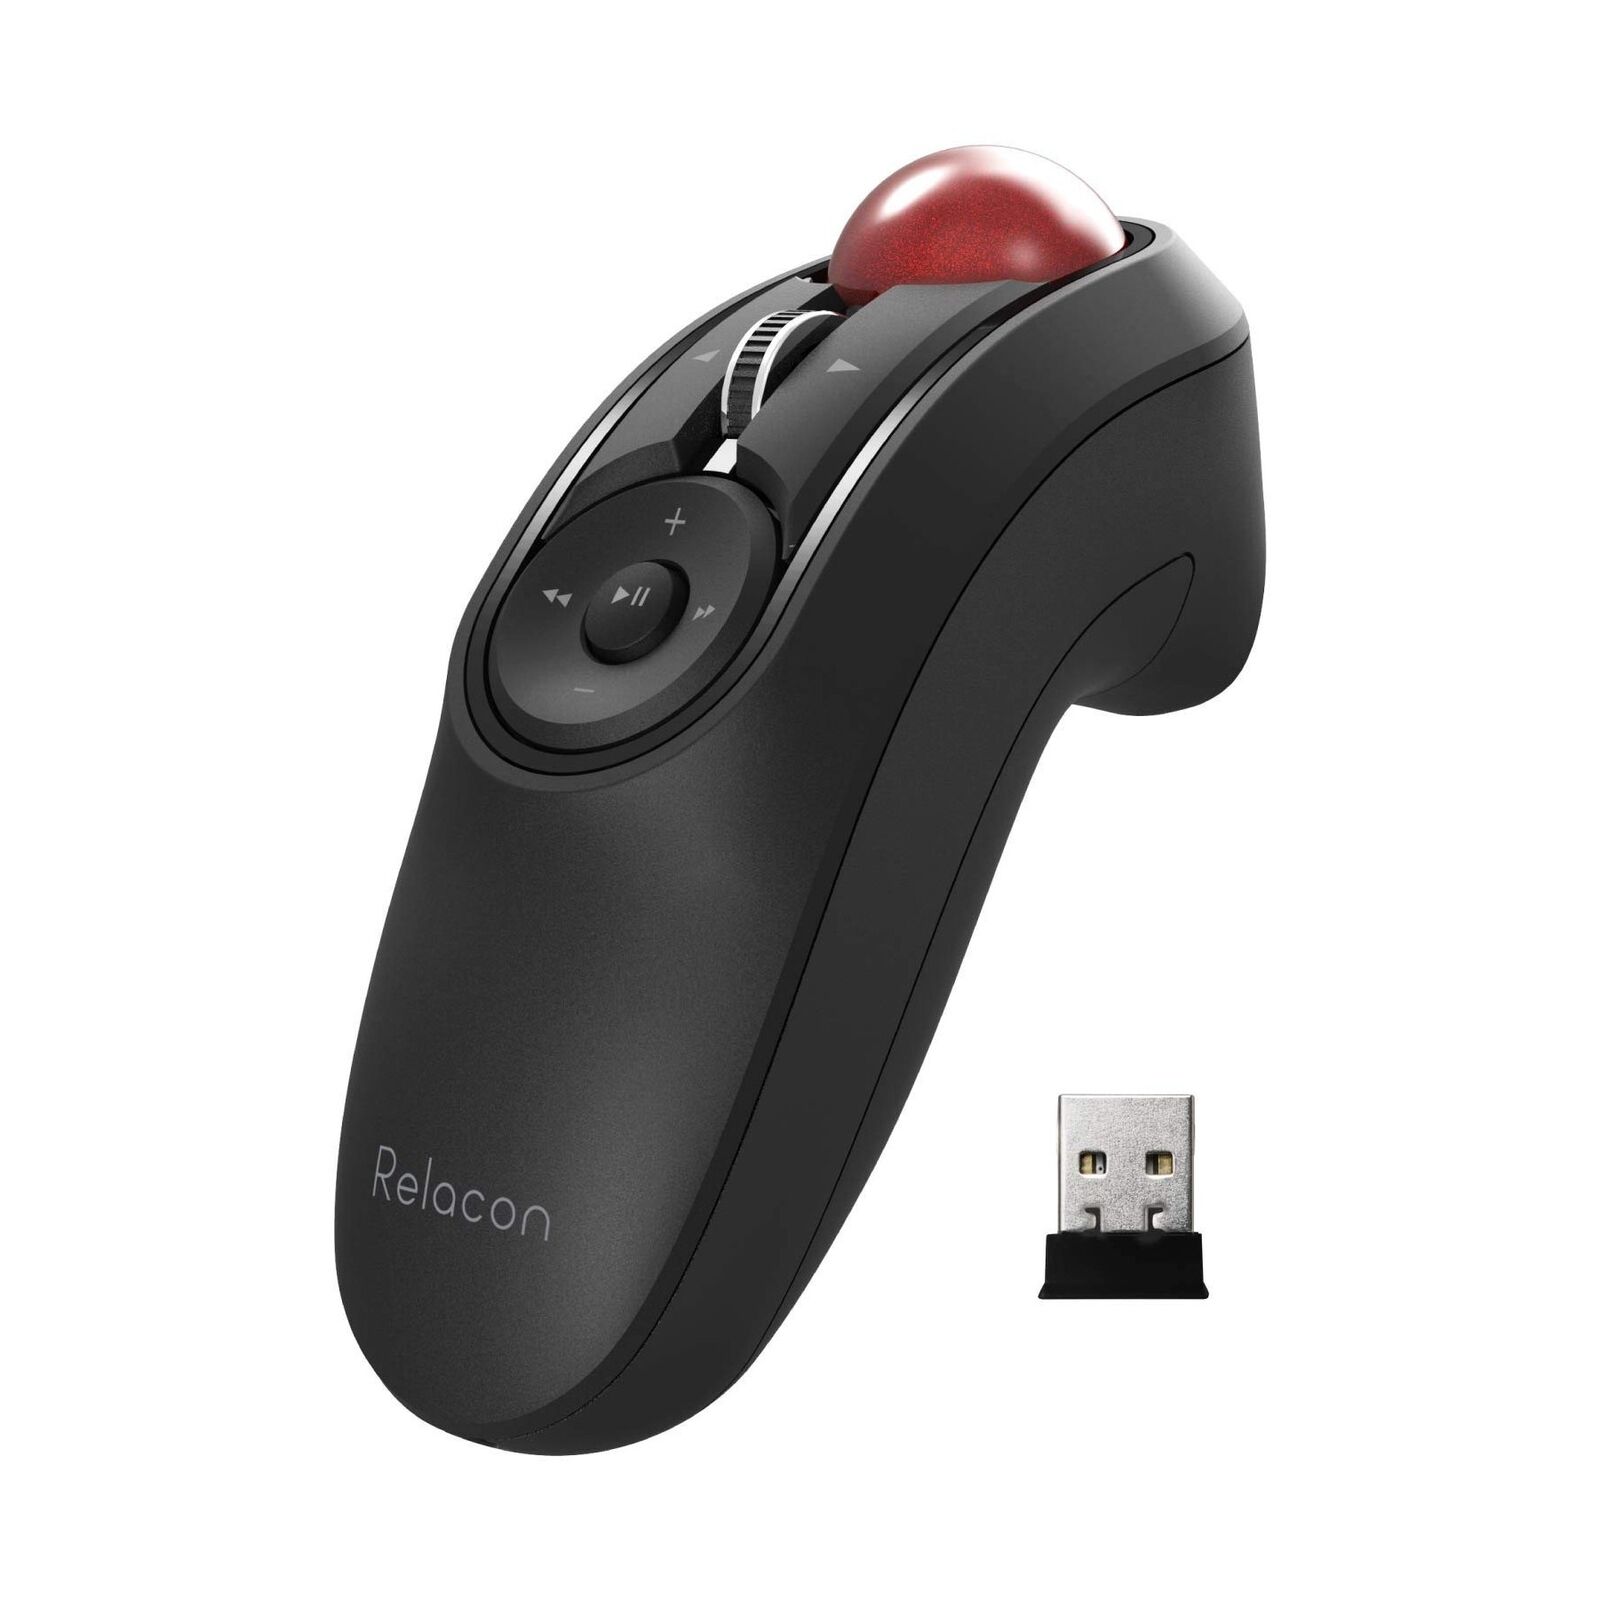 ELECOM Relacon Handheld Trackball Mouse, Thumb Control, 2.4GHz Wireless, Ergo...